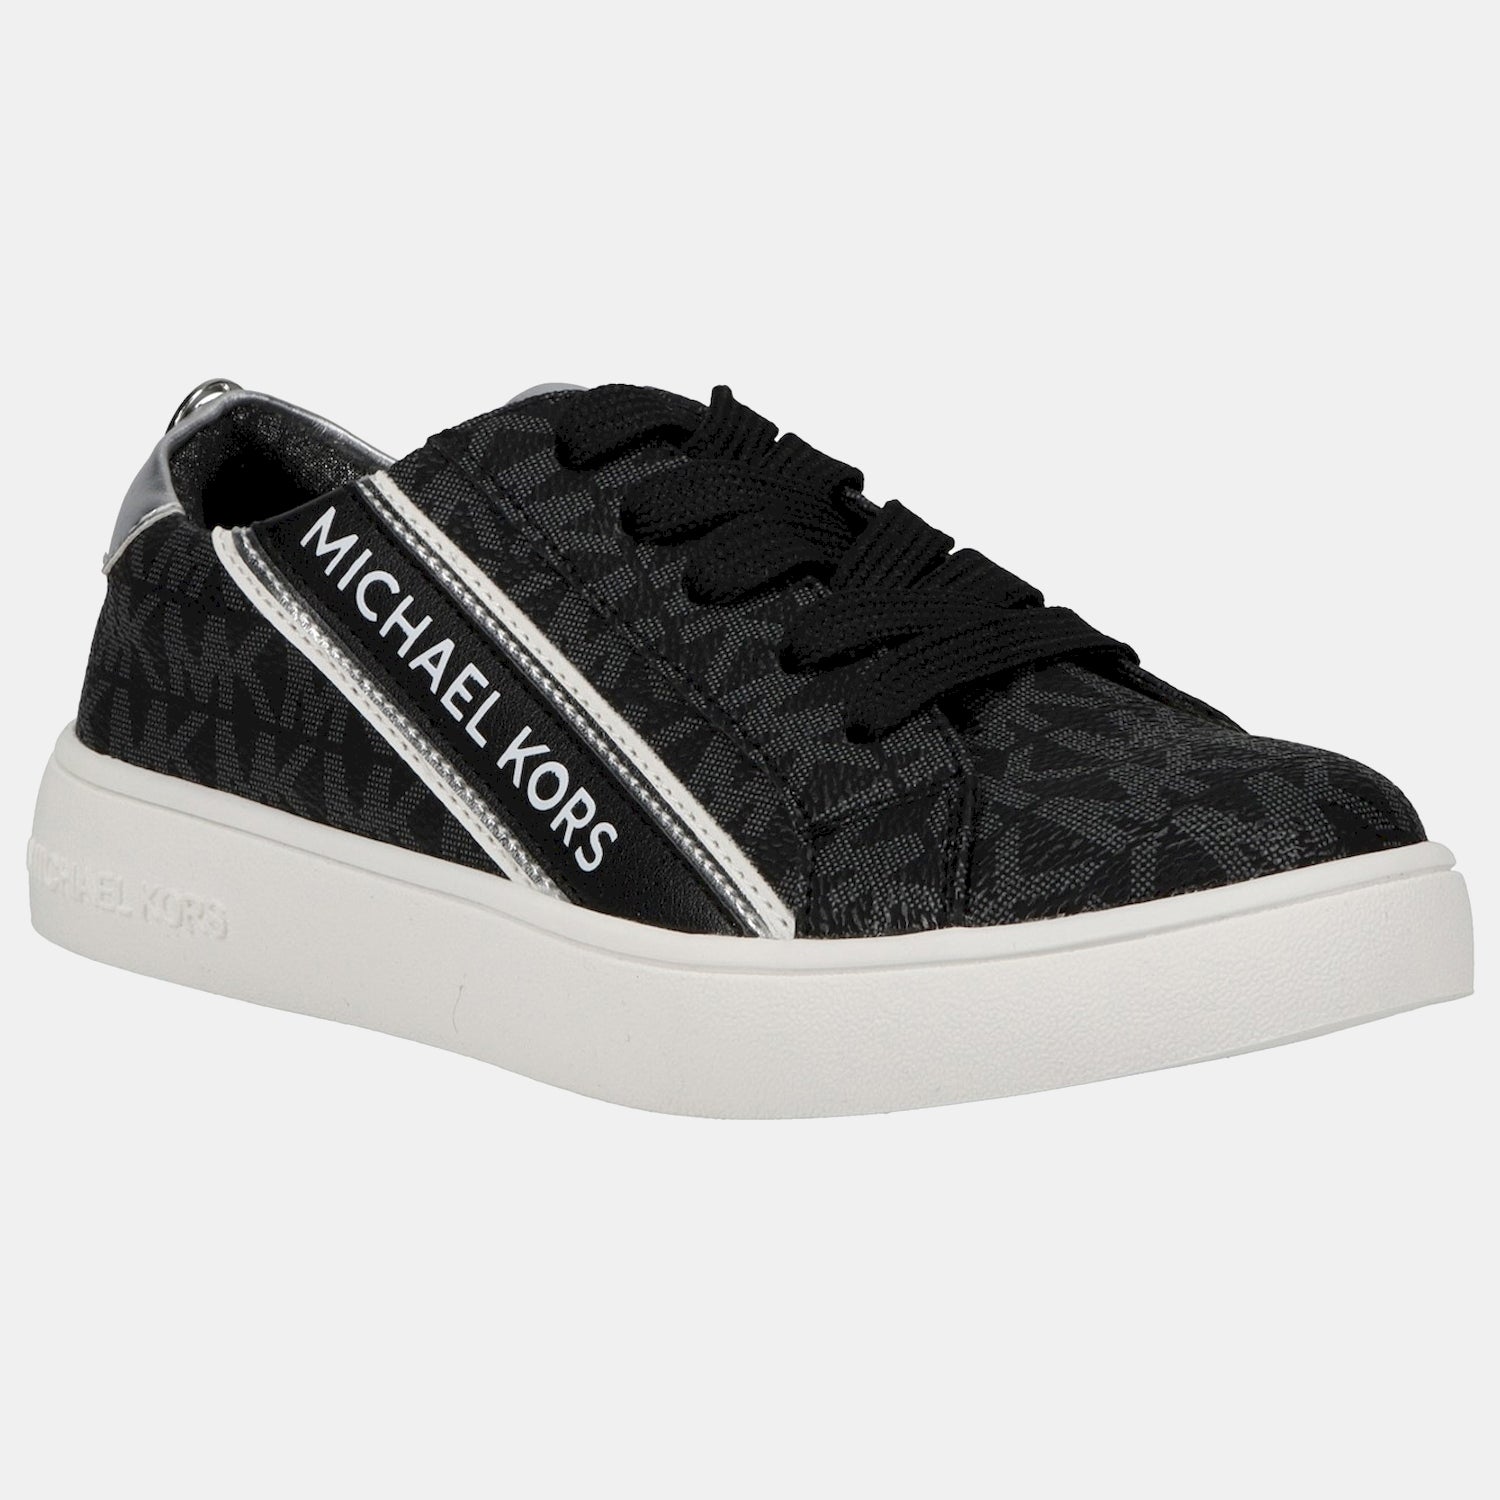 Michael Kors Sapatilhas Sneakers Shoes Jem Slade Black Preto_shot1